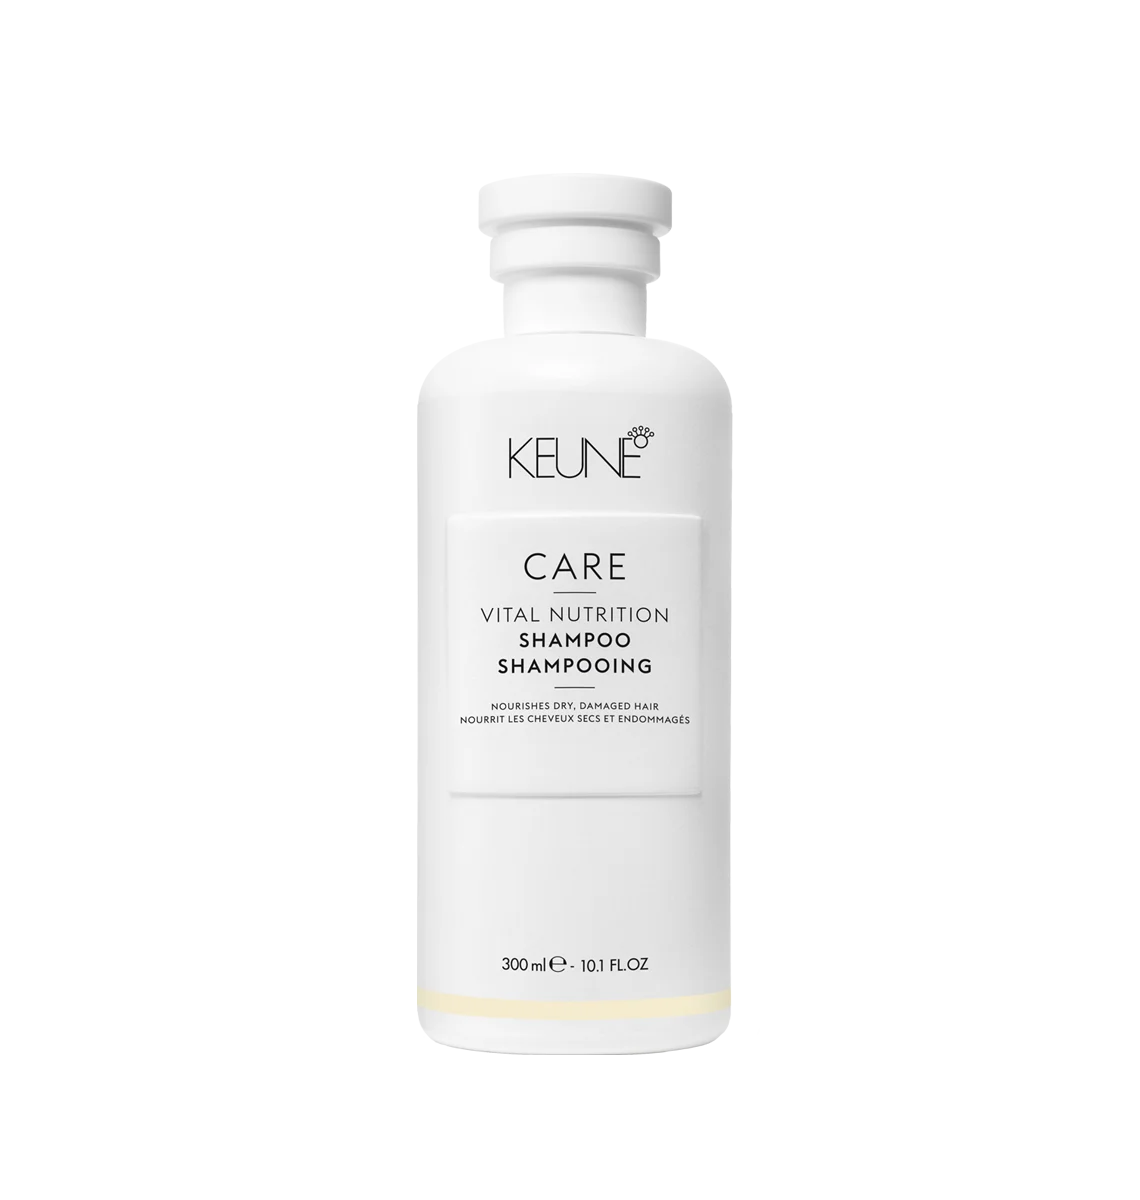 Foto van fles Keune Care Vital Nutrition Shampoo